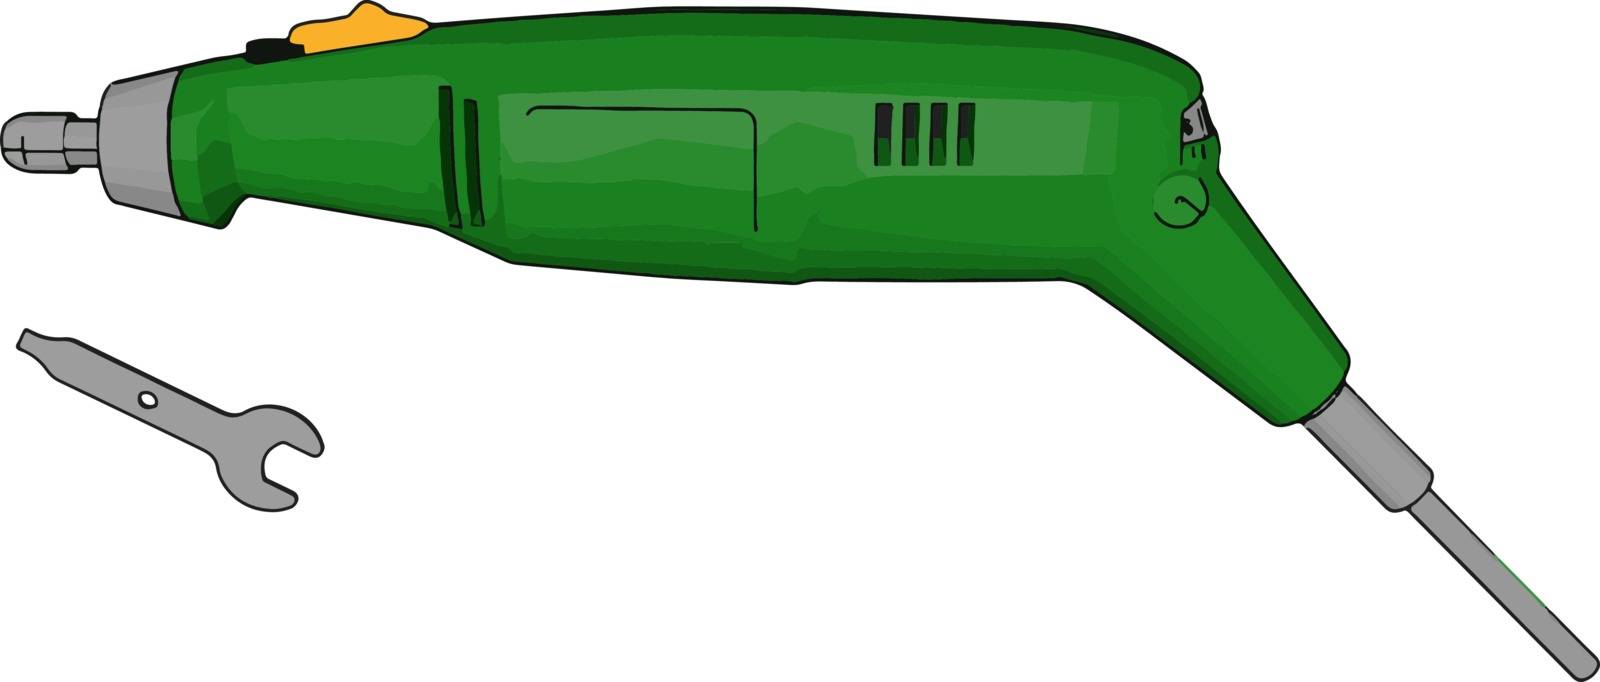 Green tool, illustration, vector on white background.